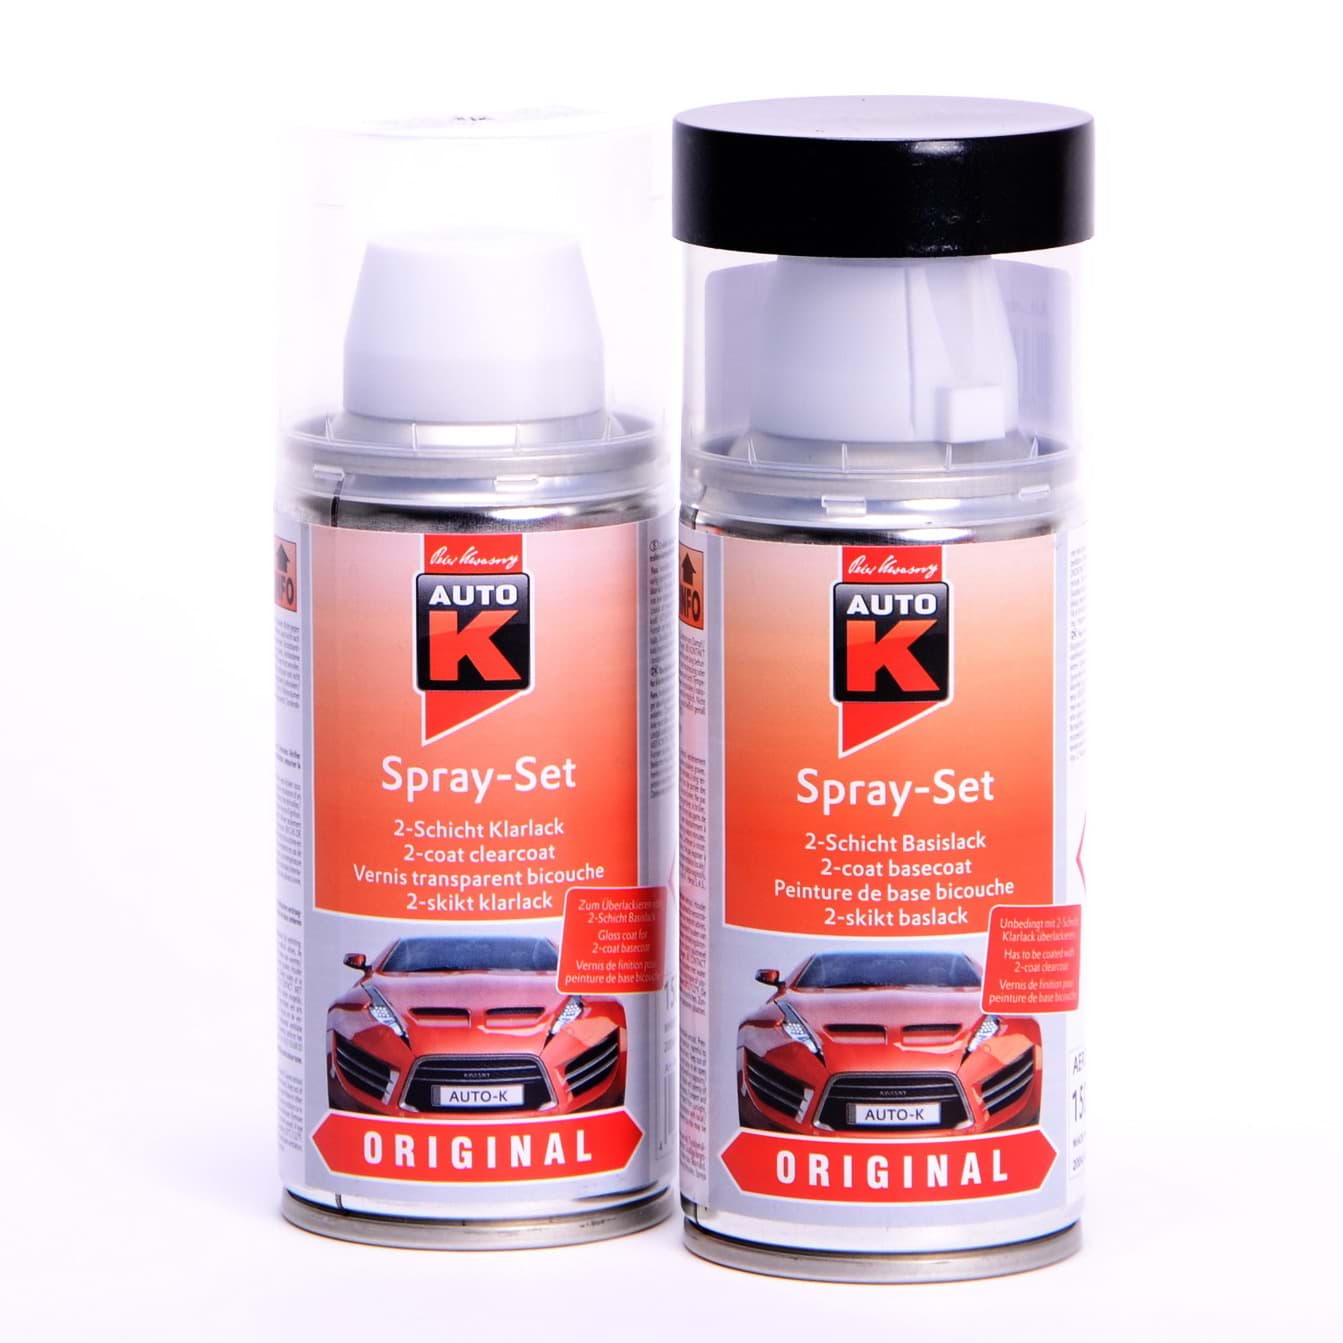 Afbeelding van Auto-K Spray-Set Autolack für Opel 167 / 1RU Pannacotta met 21474